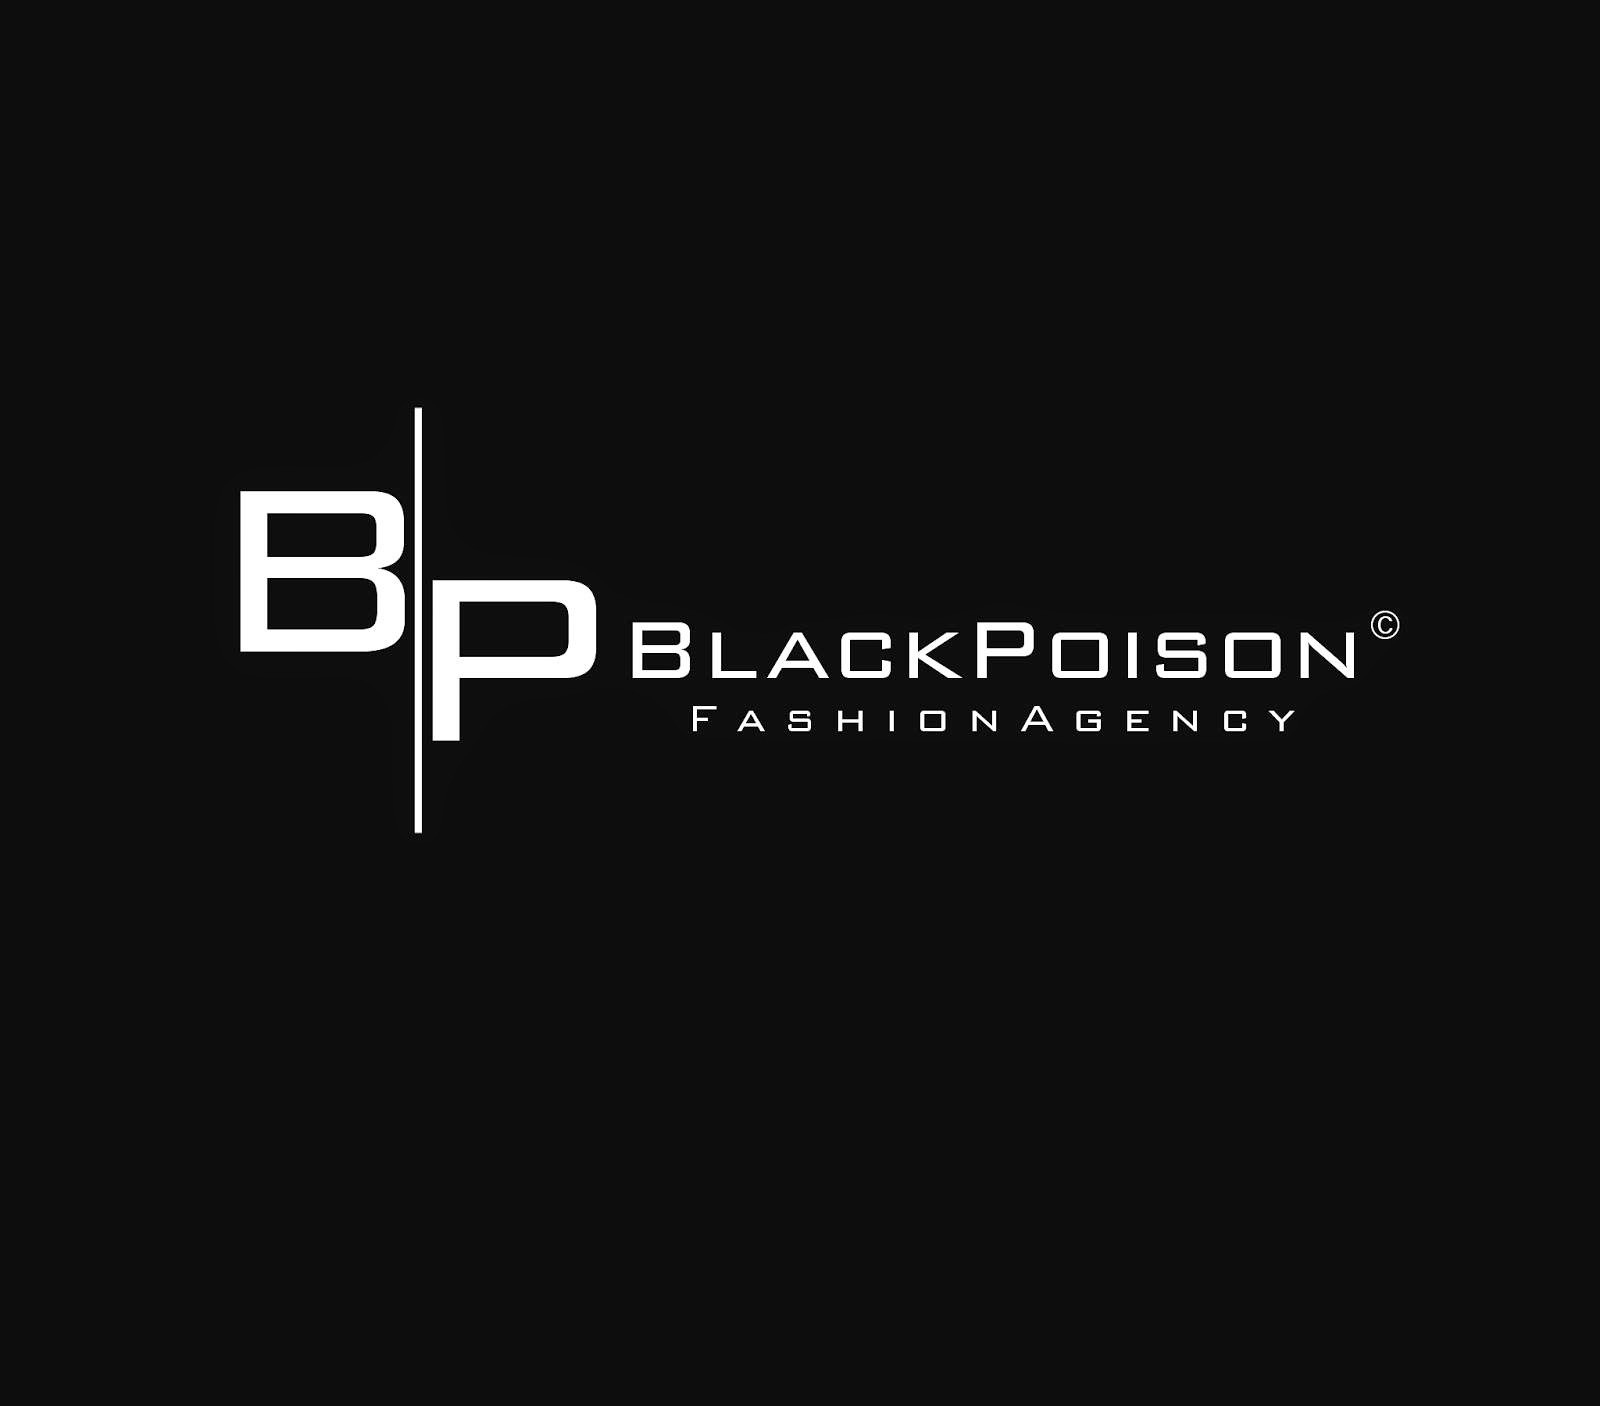 Black Poison